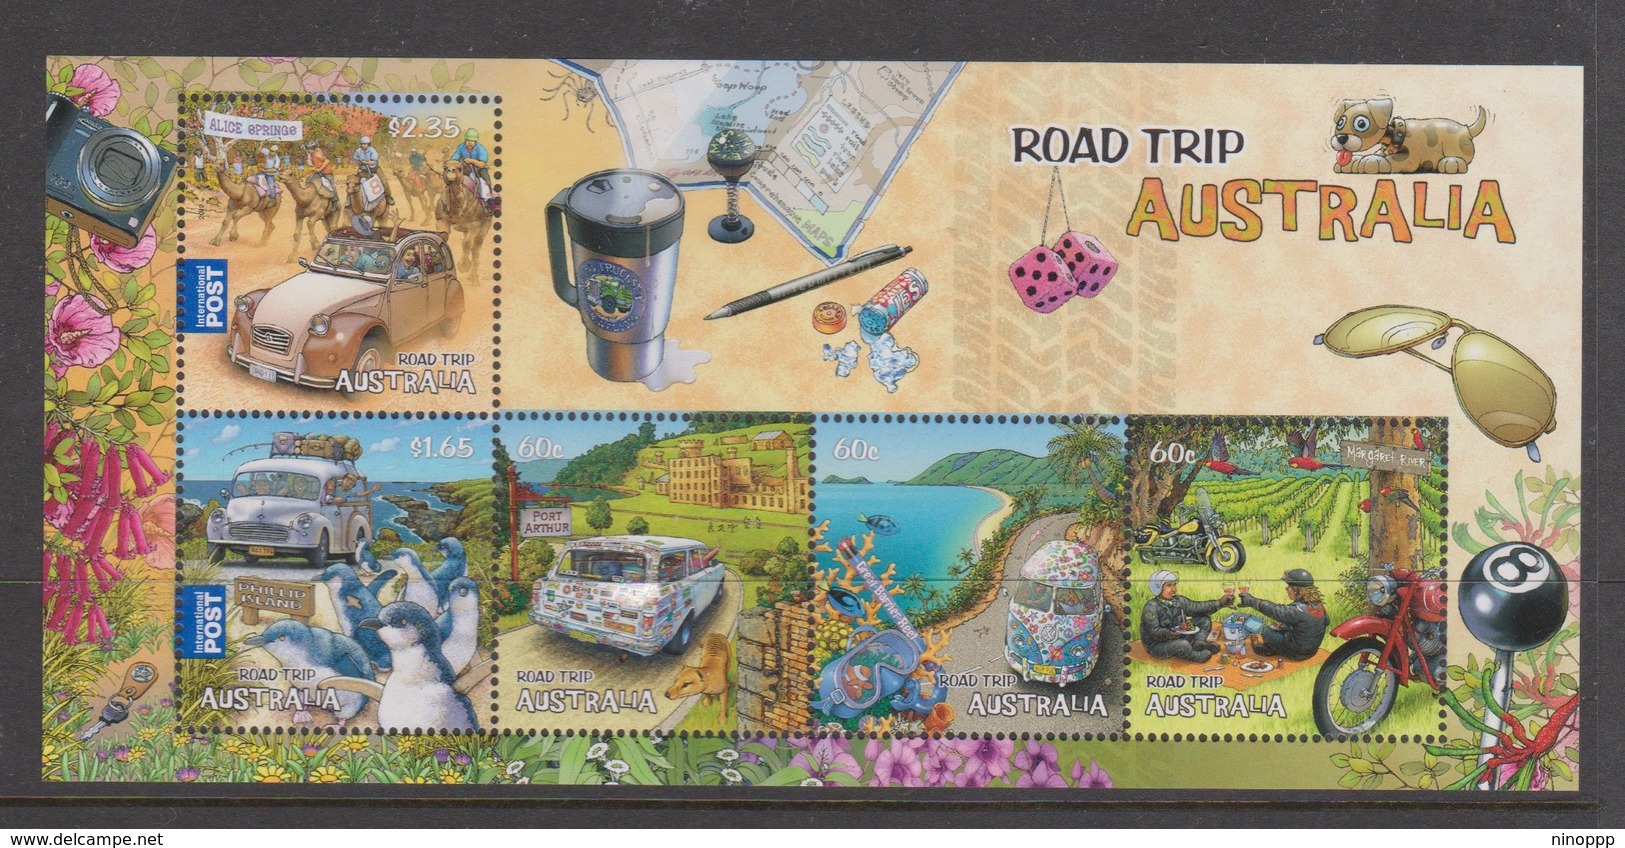 Australia ASC 3028MS 2012 Road Trip Australia Part I, Miniature Sheet,mint Never Hinged - Mint Stamps